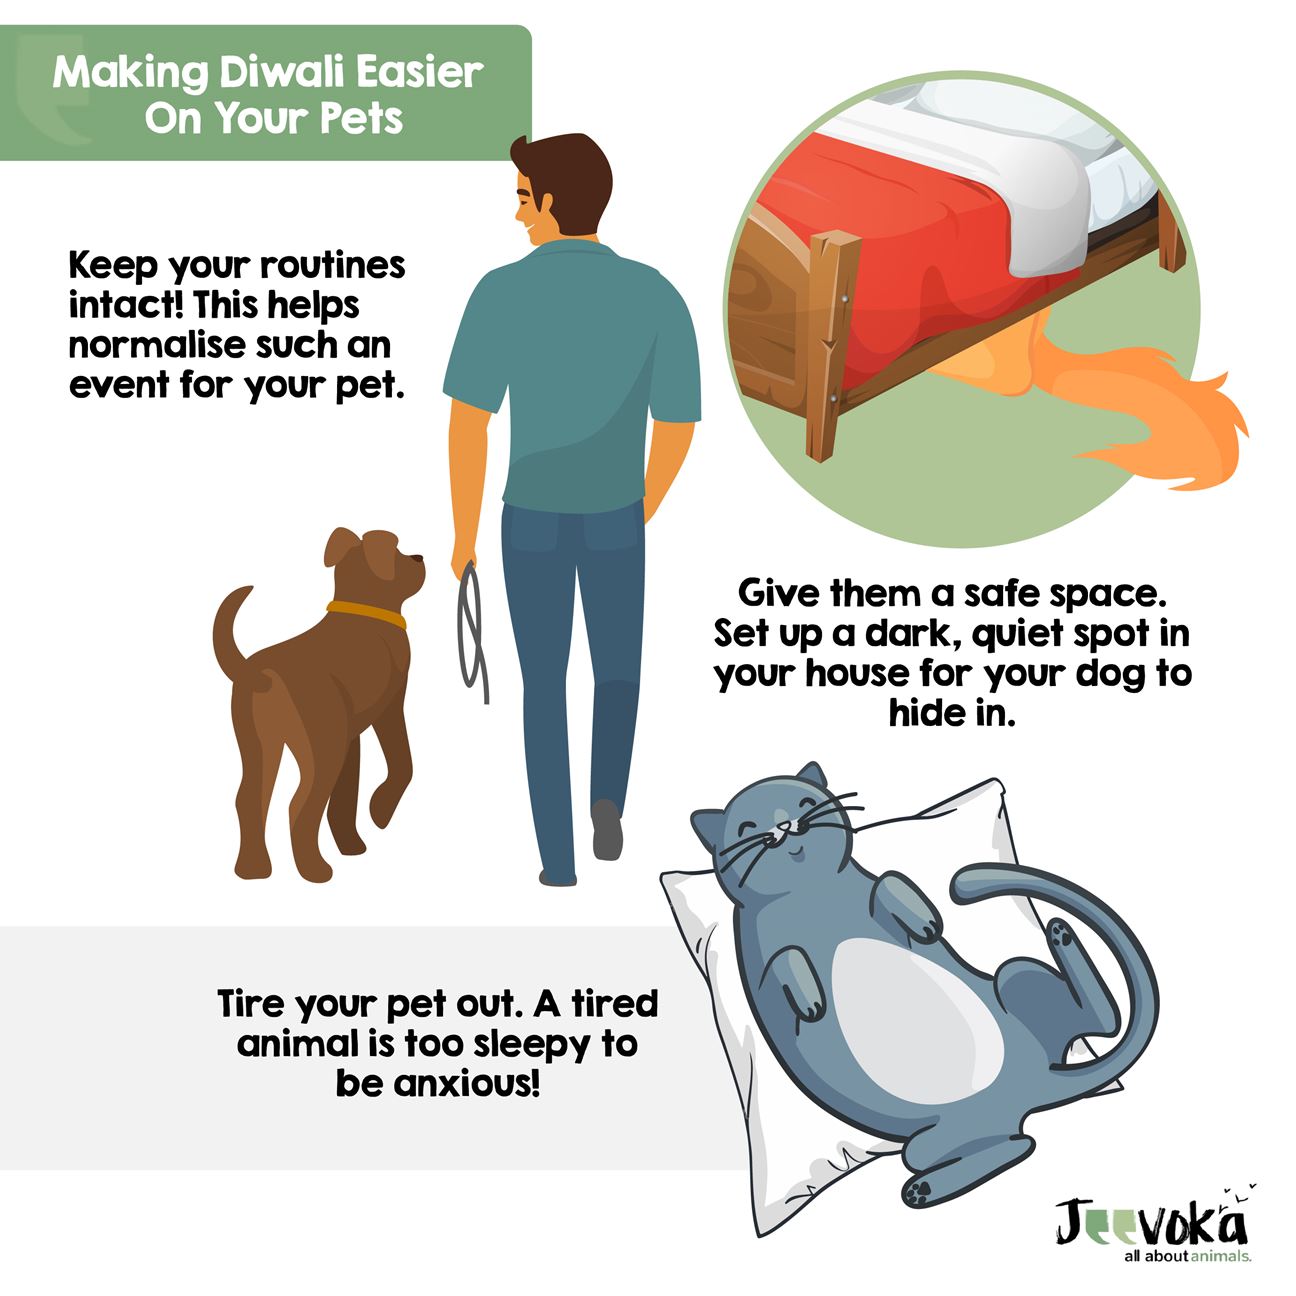 Jeevoka - Tips to Help Your Animal Remain Stress-Free This Diwali!